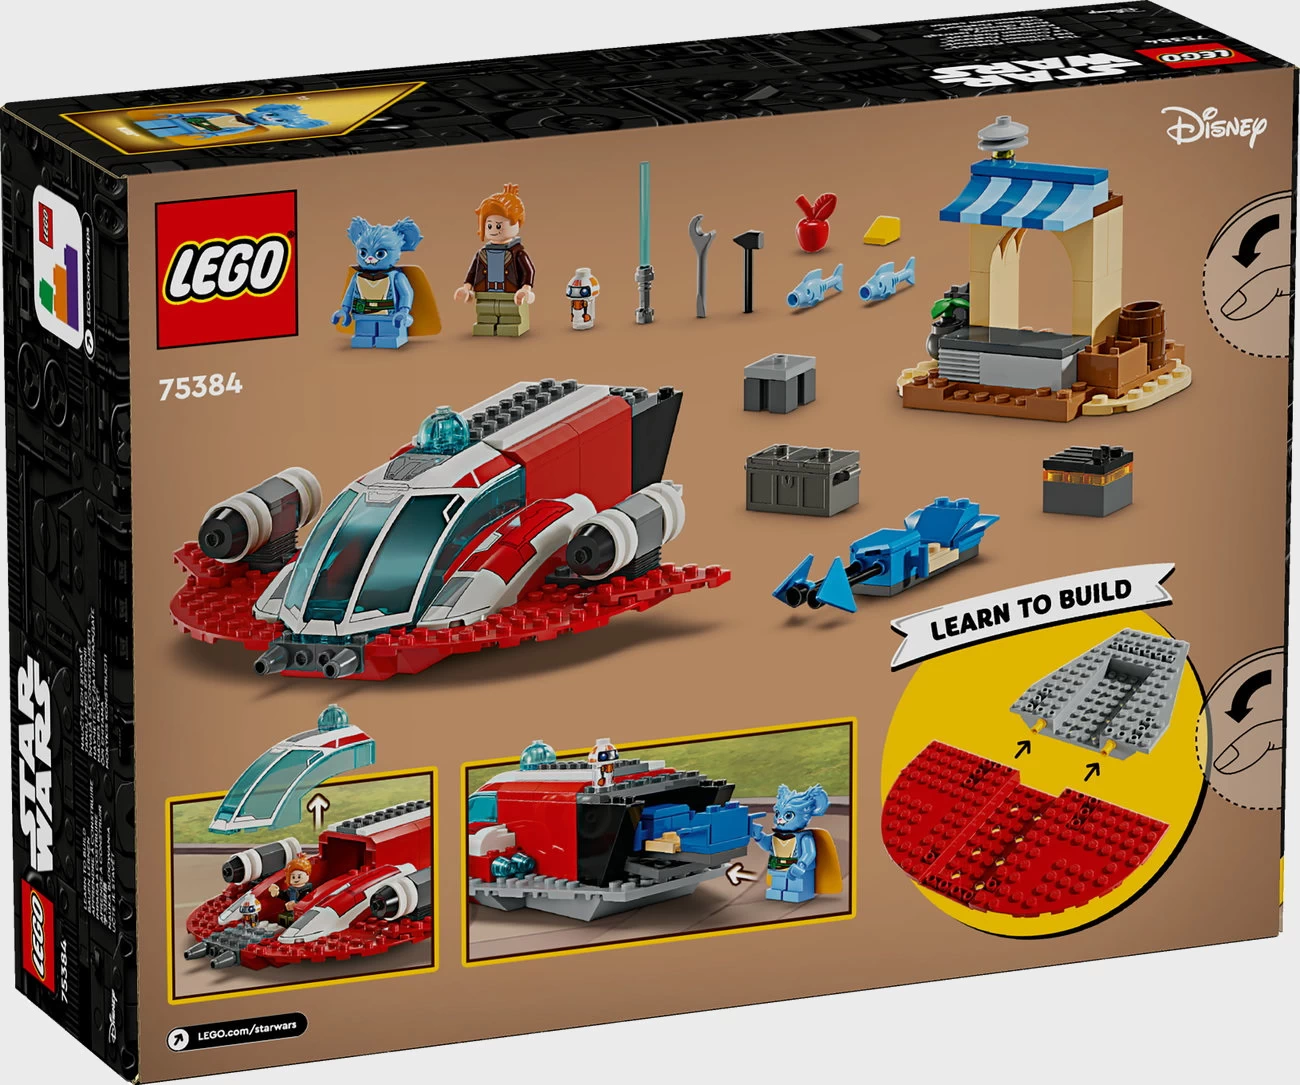 LEGO Star Wars 75384 - Crimson Firehawk